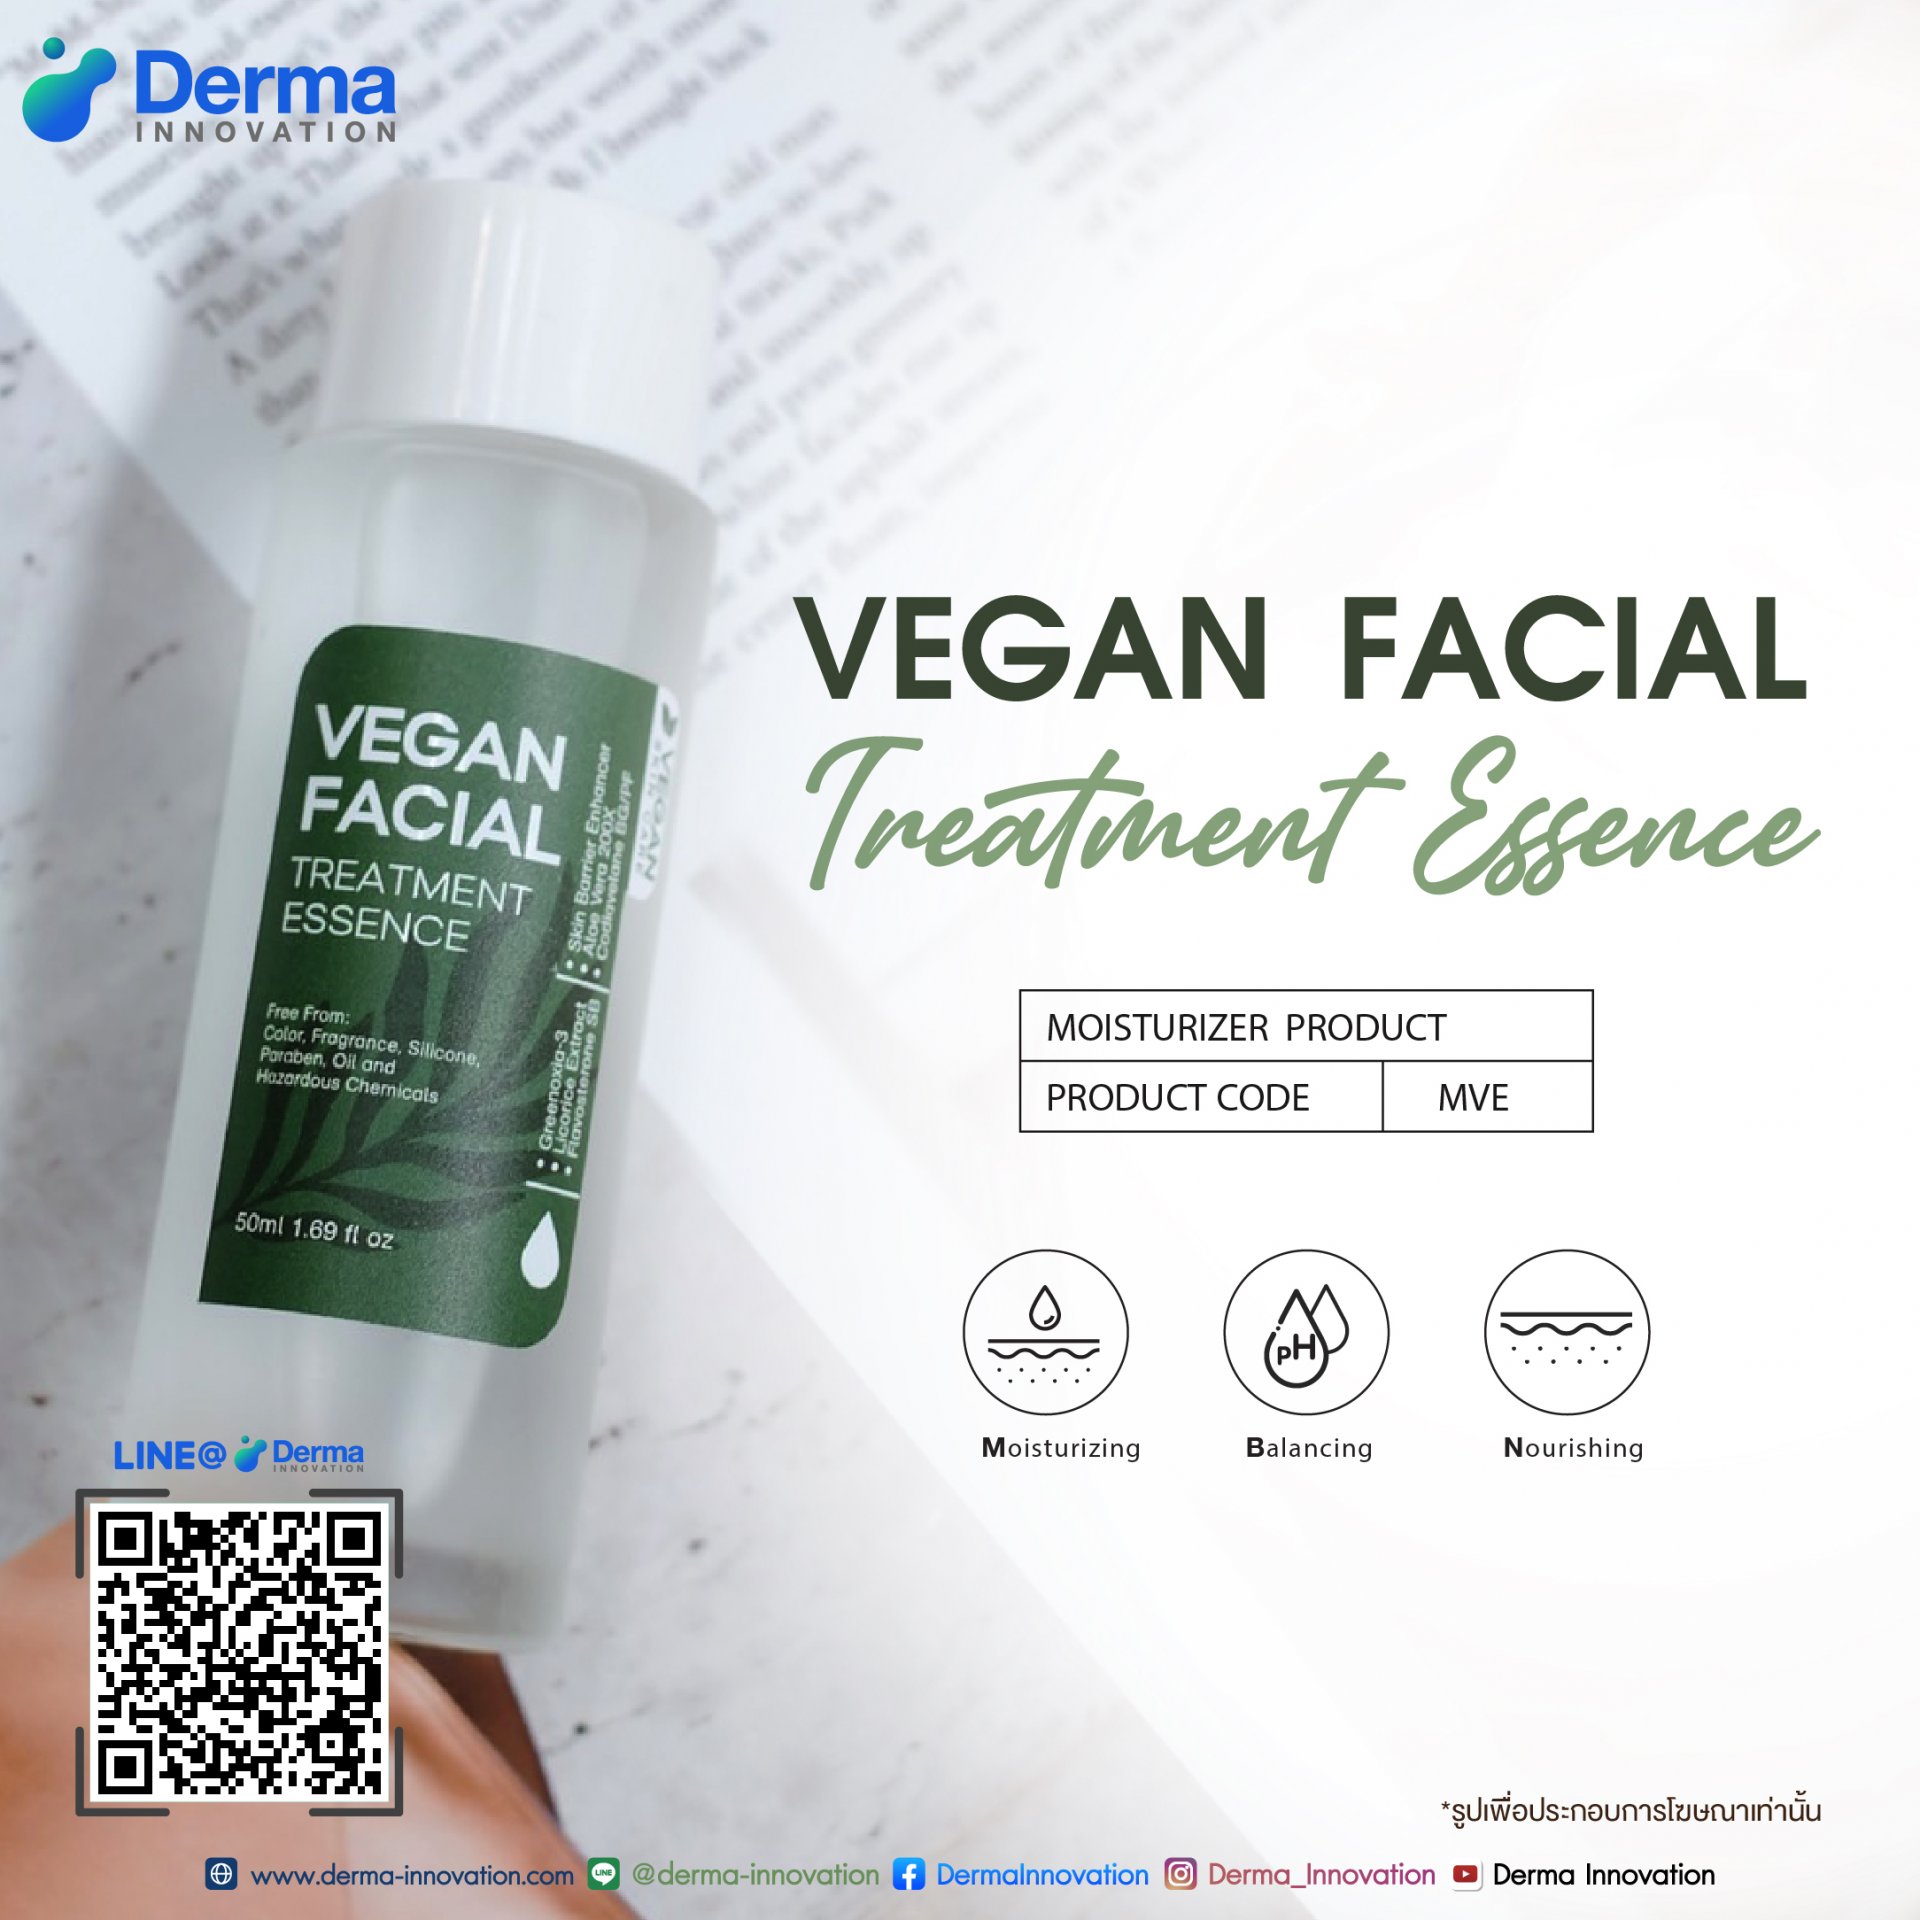 Vegan Facial Treatment Essence